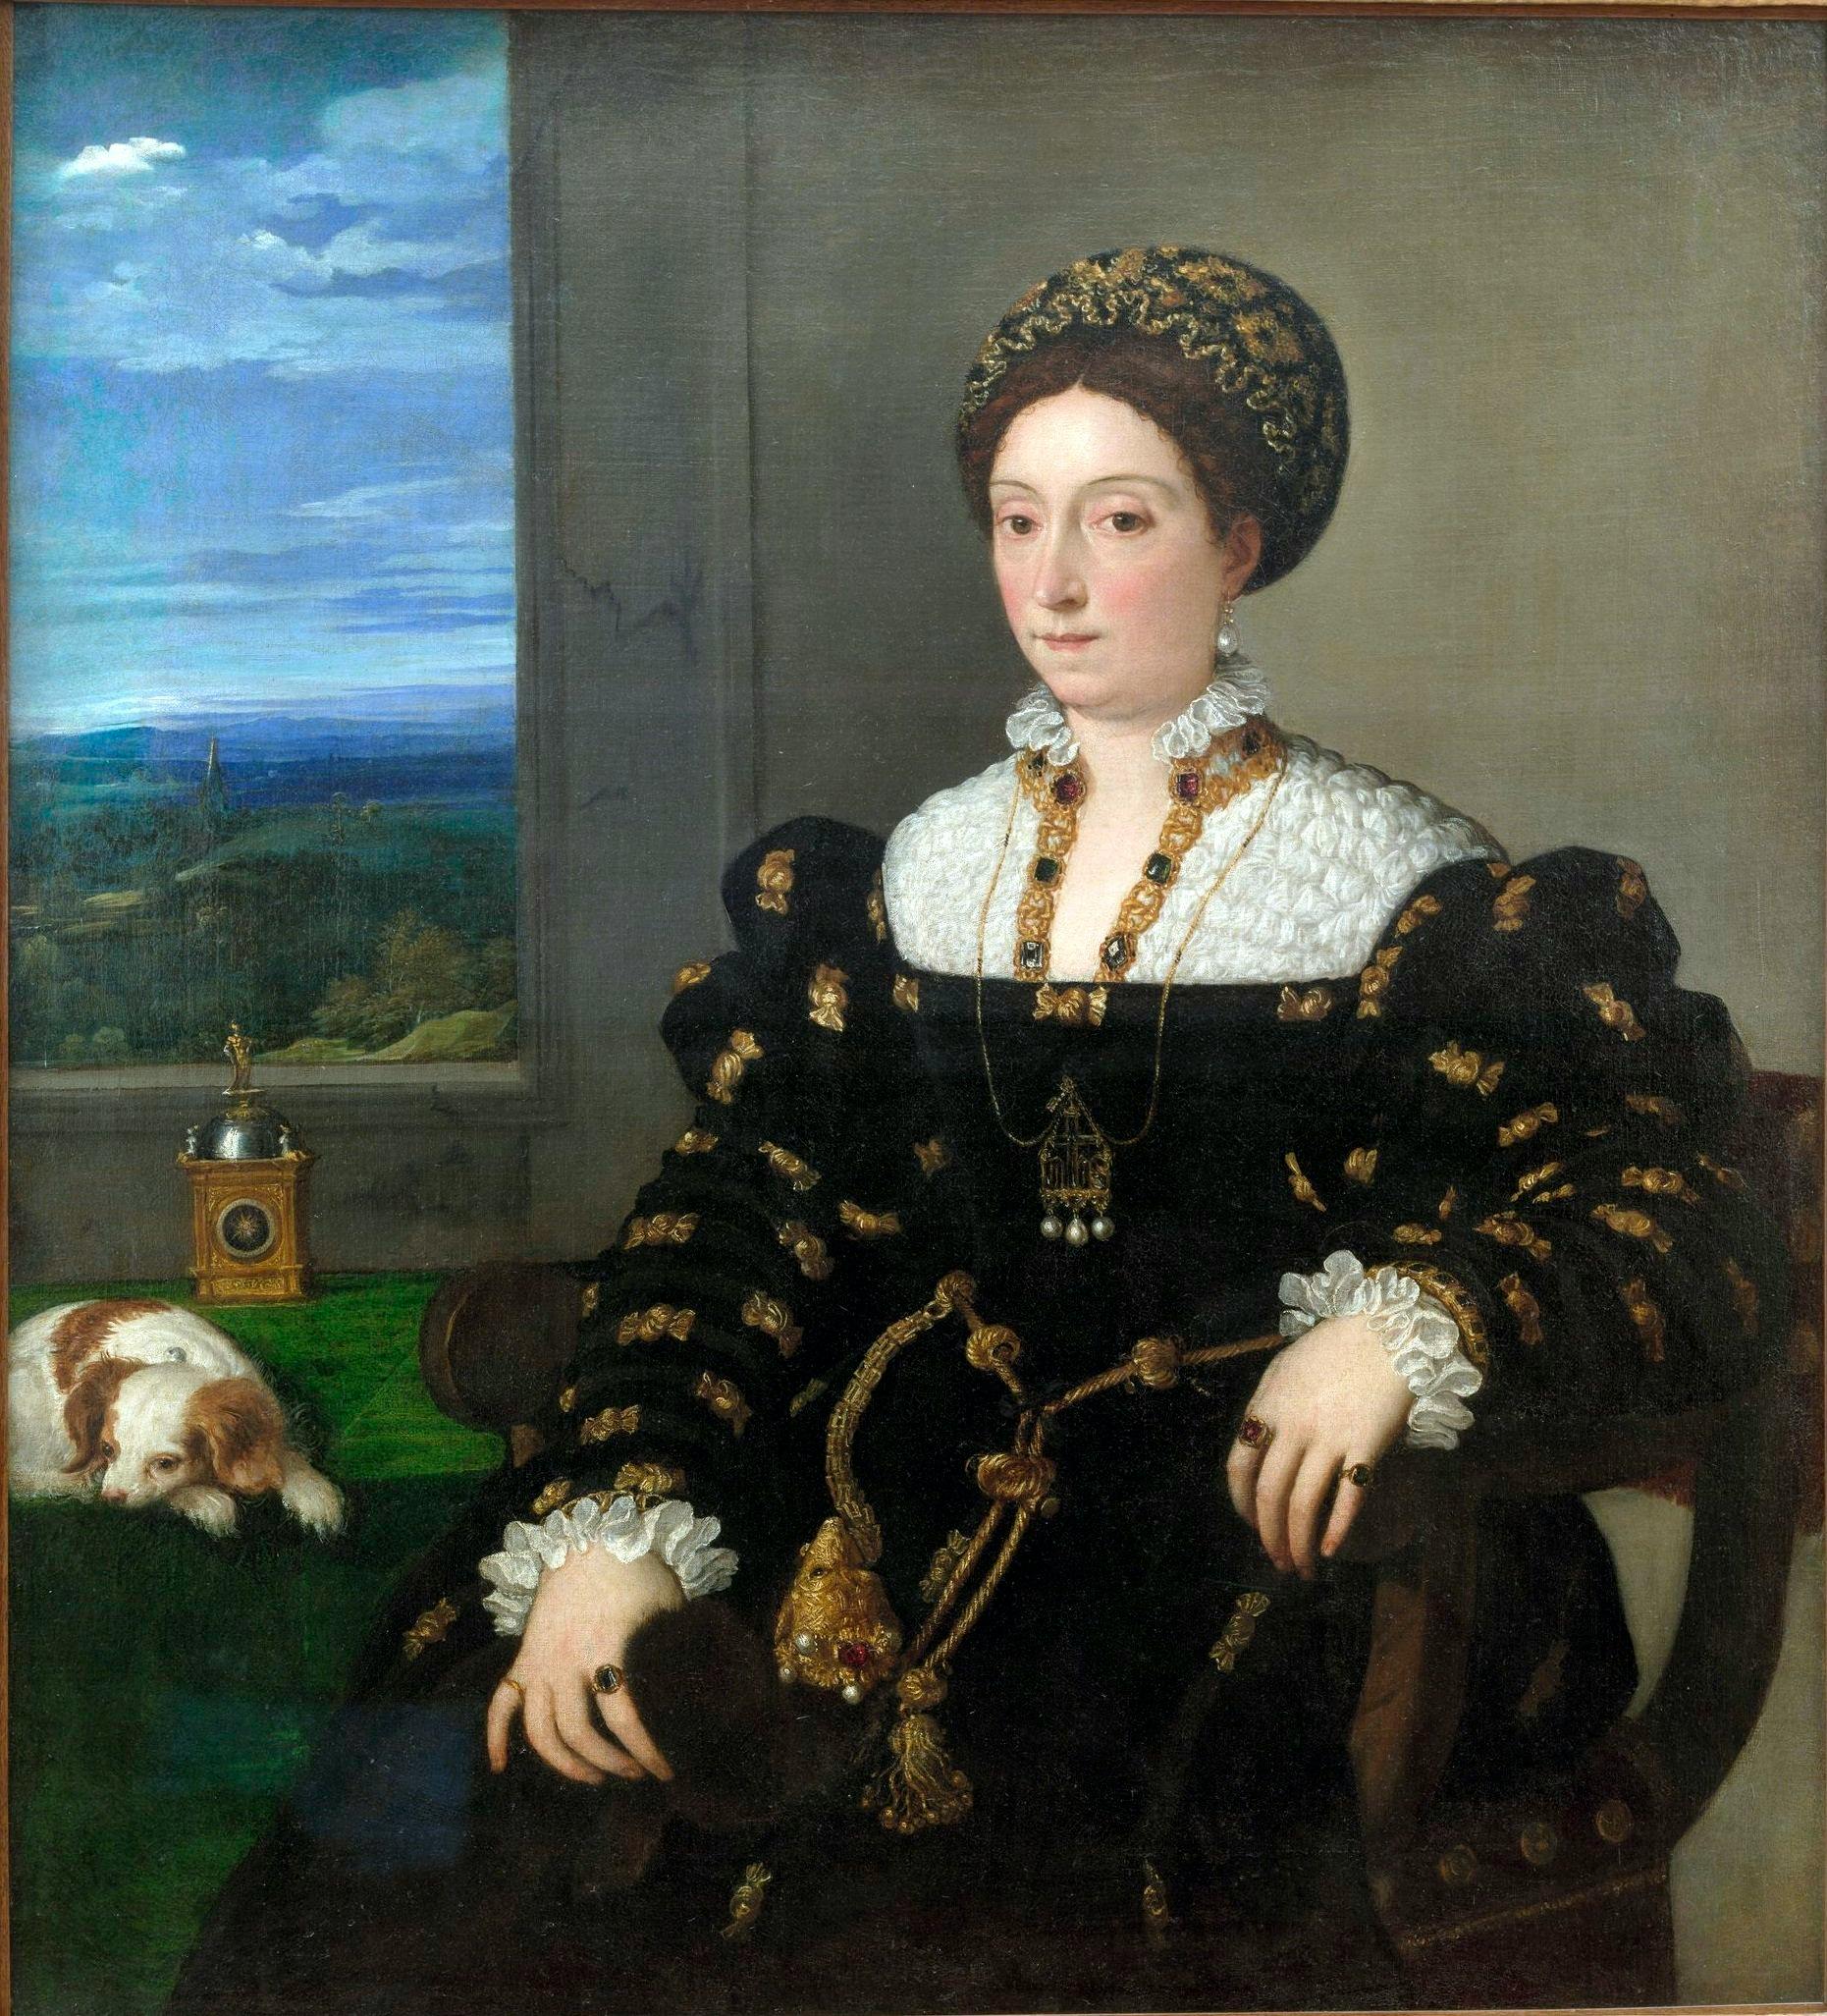 Portrait of Eleonora Gonzaga, Duchess of Urbino